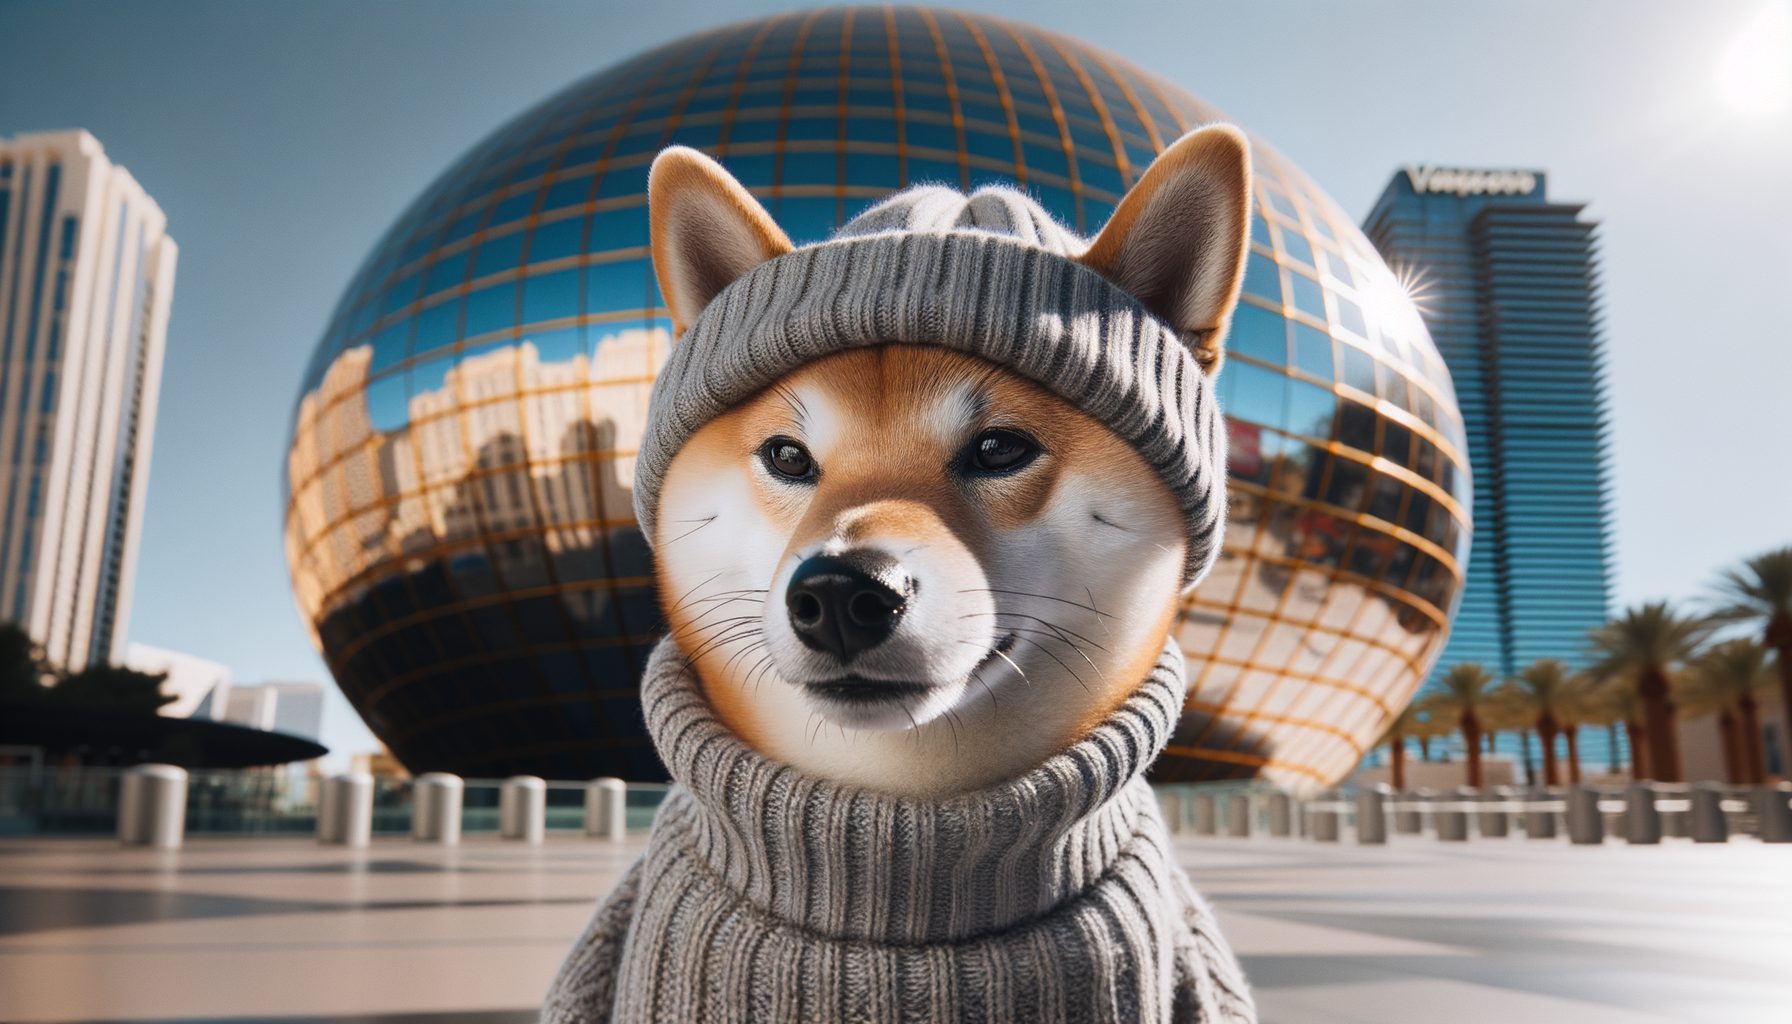 Dogwifhat: WIF Raises $670,000 to Advertise on Las Vegas Sphere